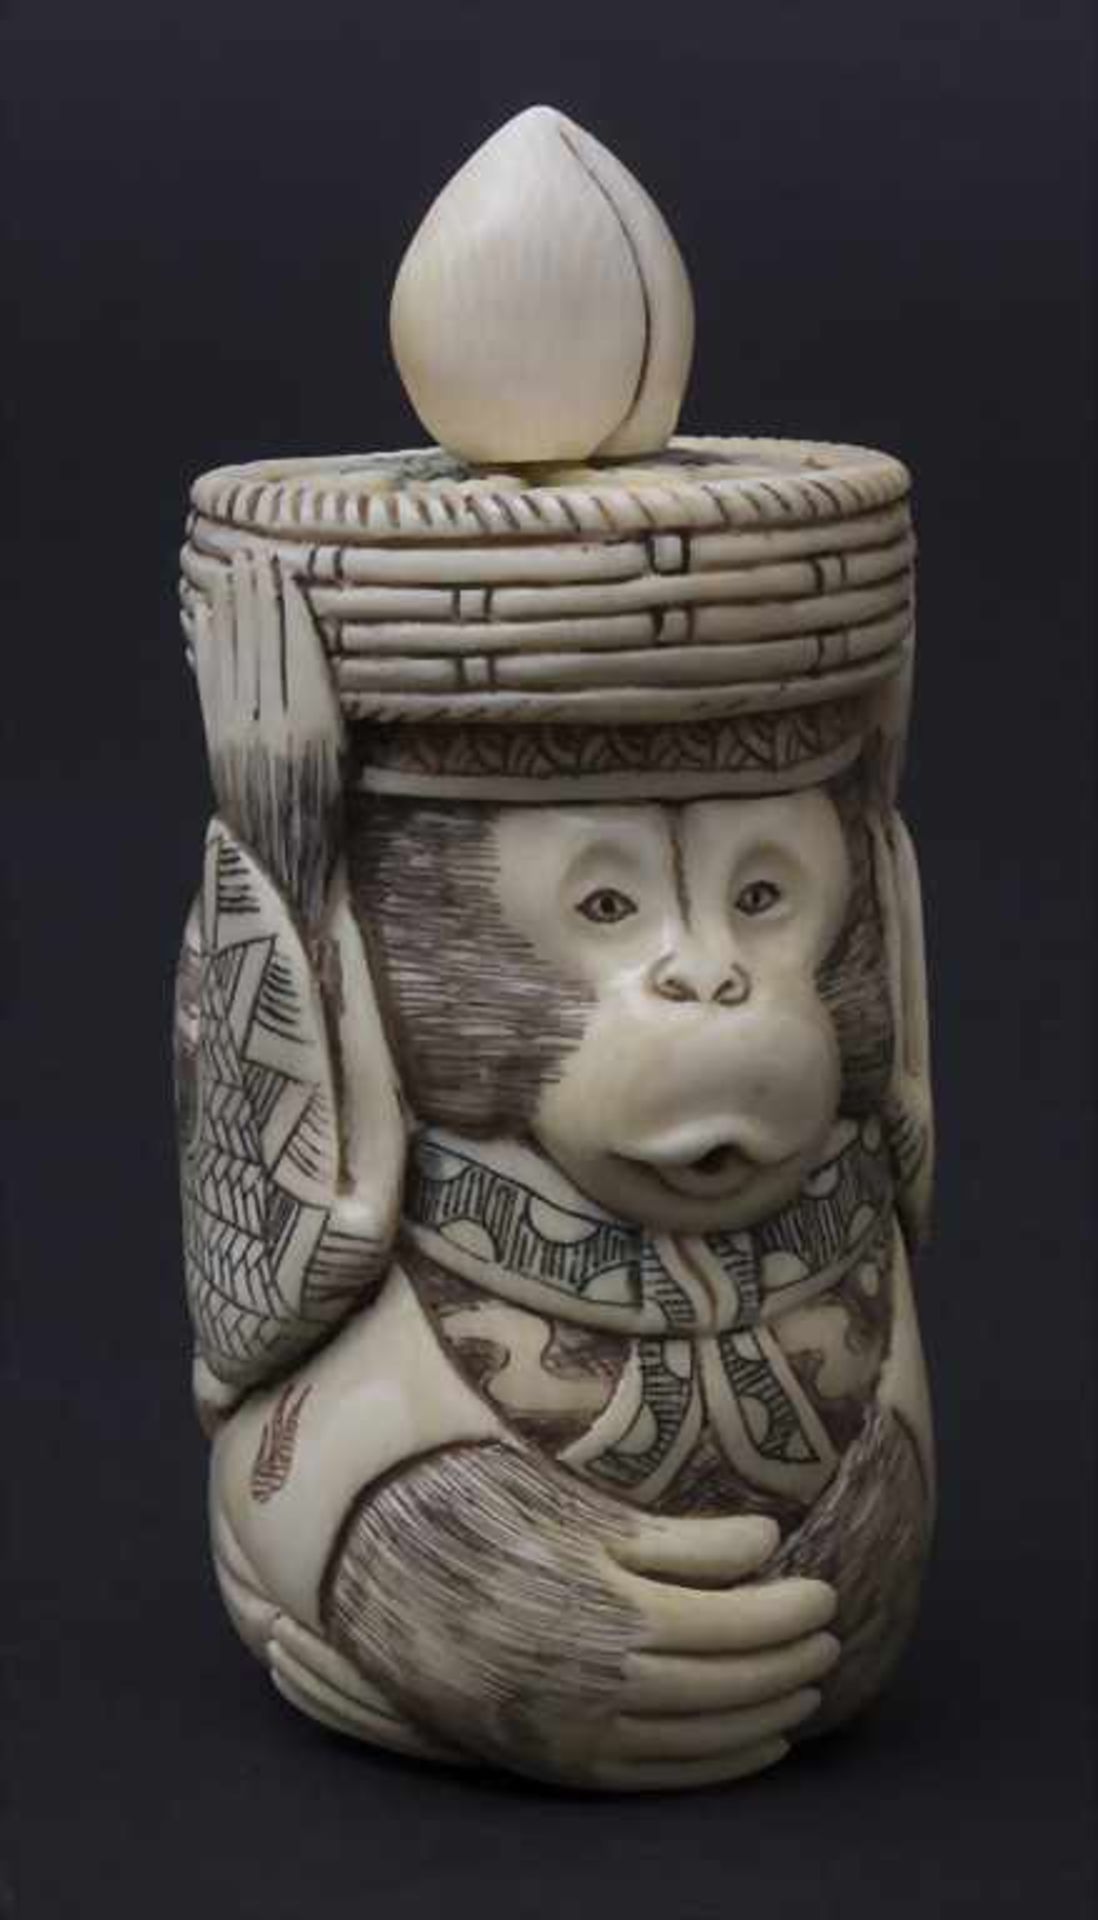 Okimono 'Gaukleraffe mit Früchtekorb' / An okimono 'monkey with a fruit basket', Japan, um